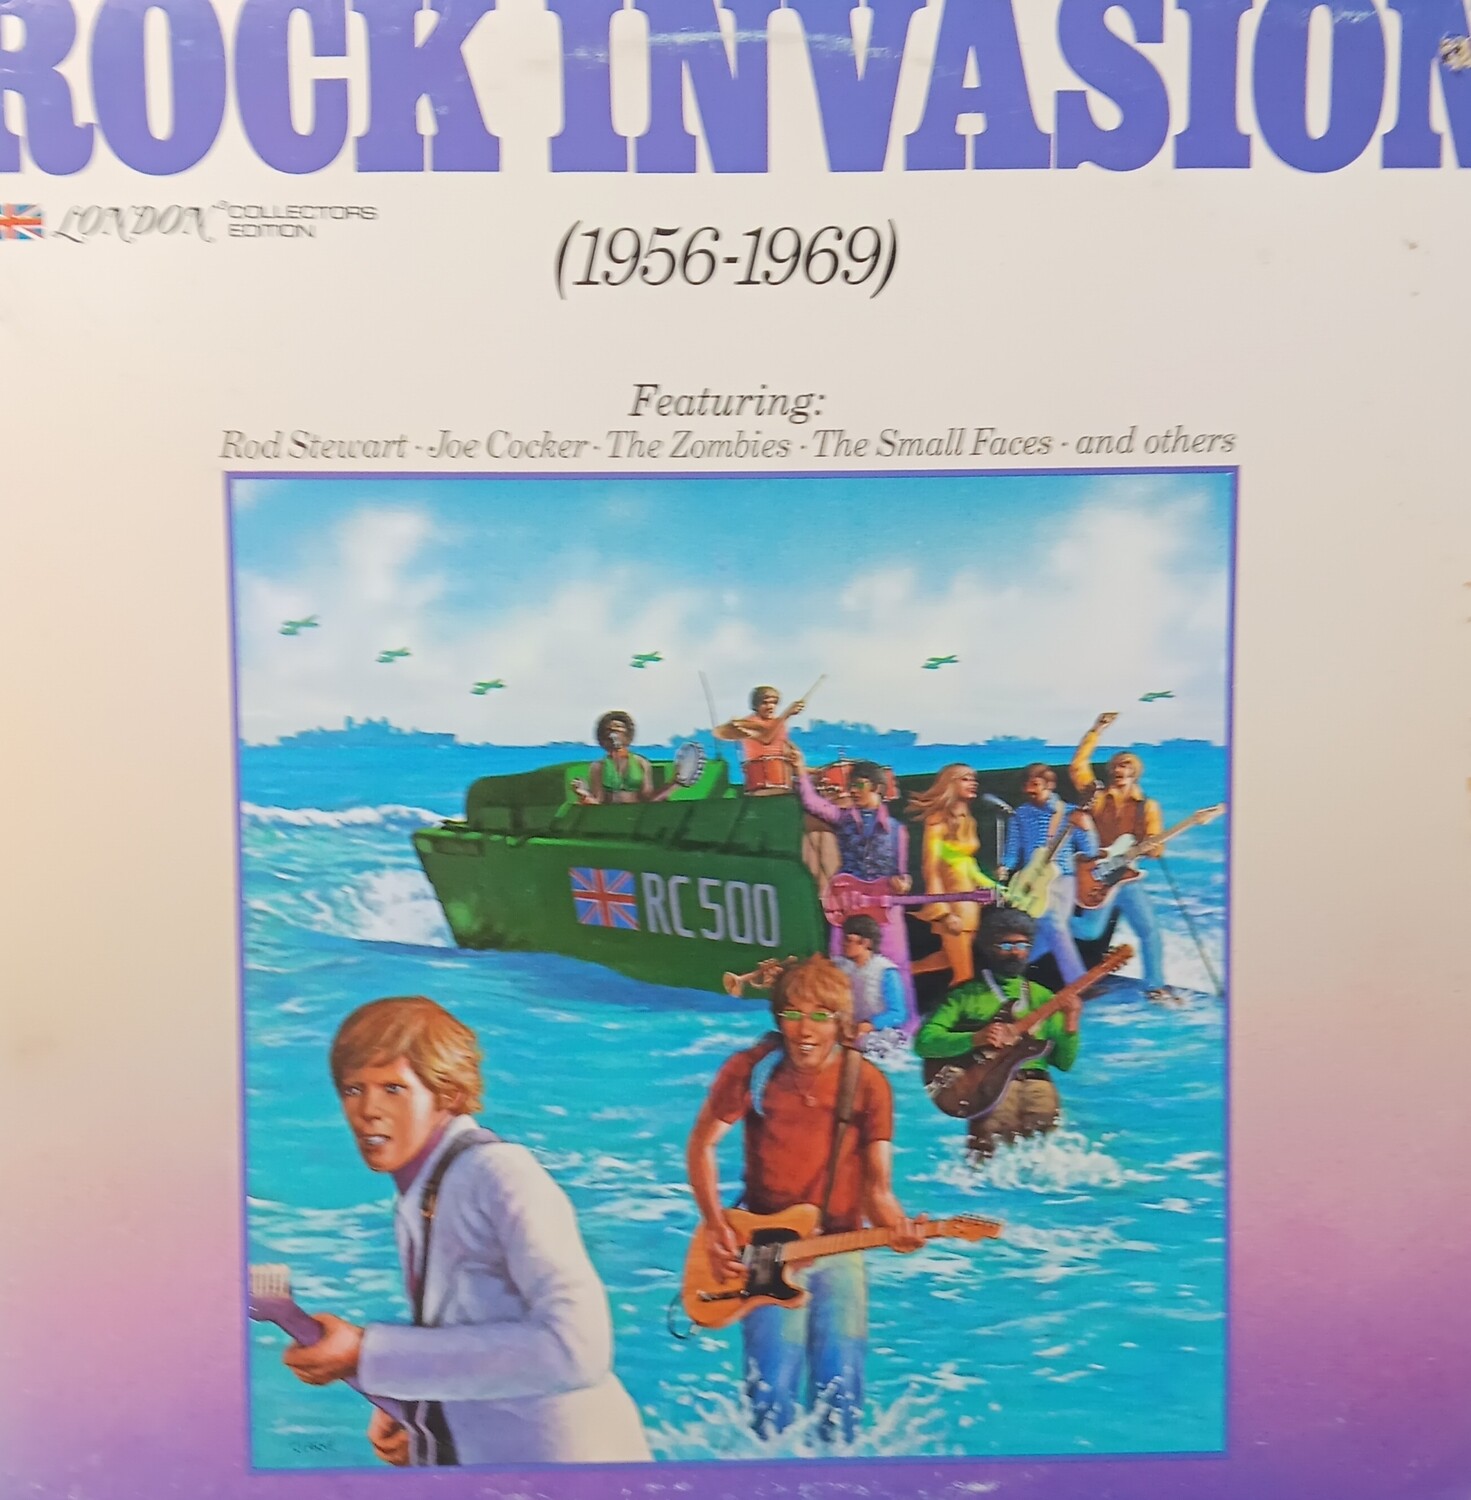 VARIOUS - Rock Invasion 1956-1969